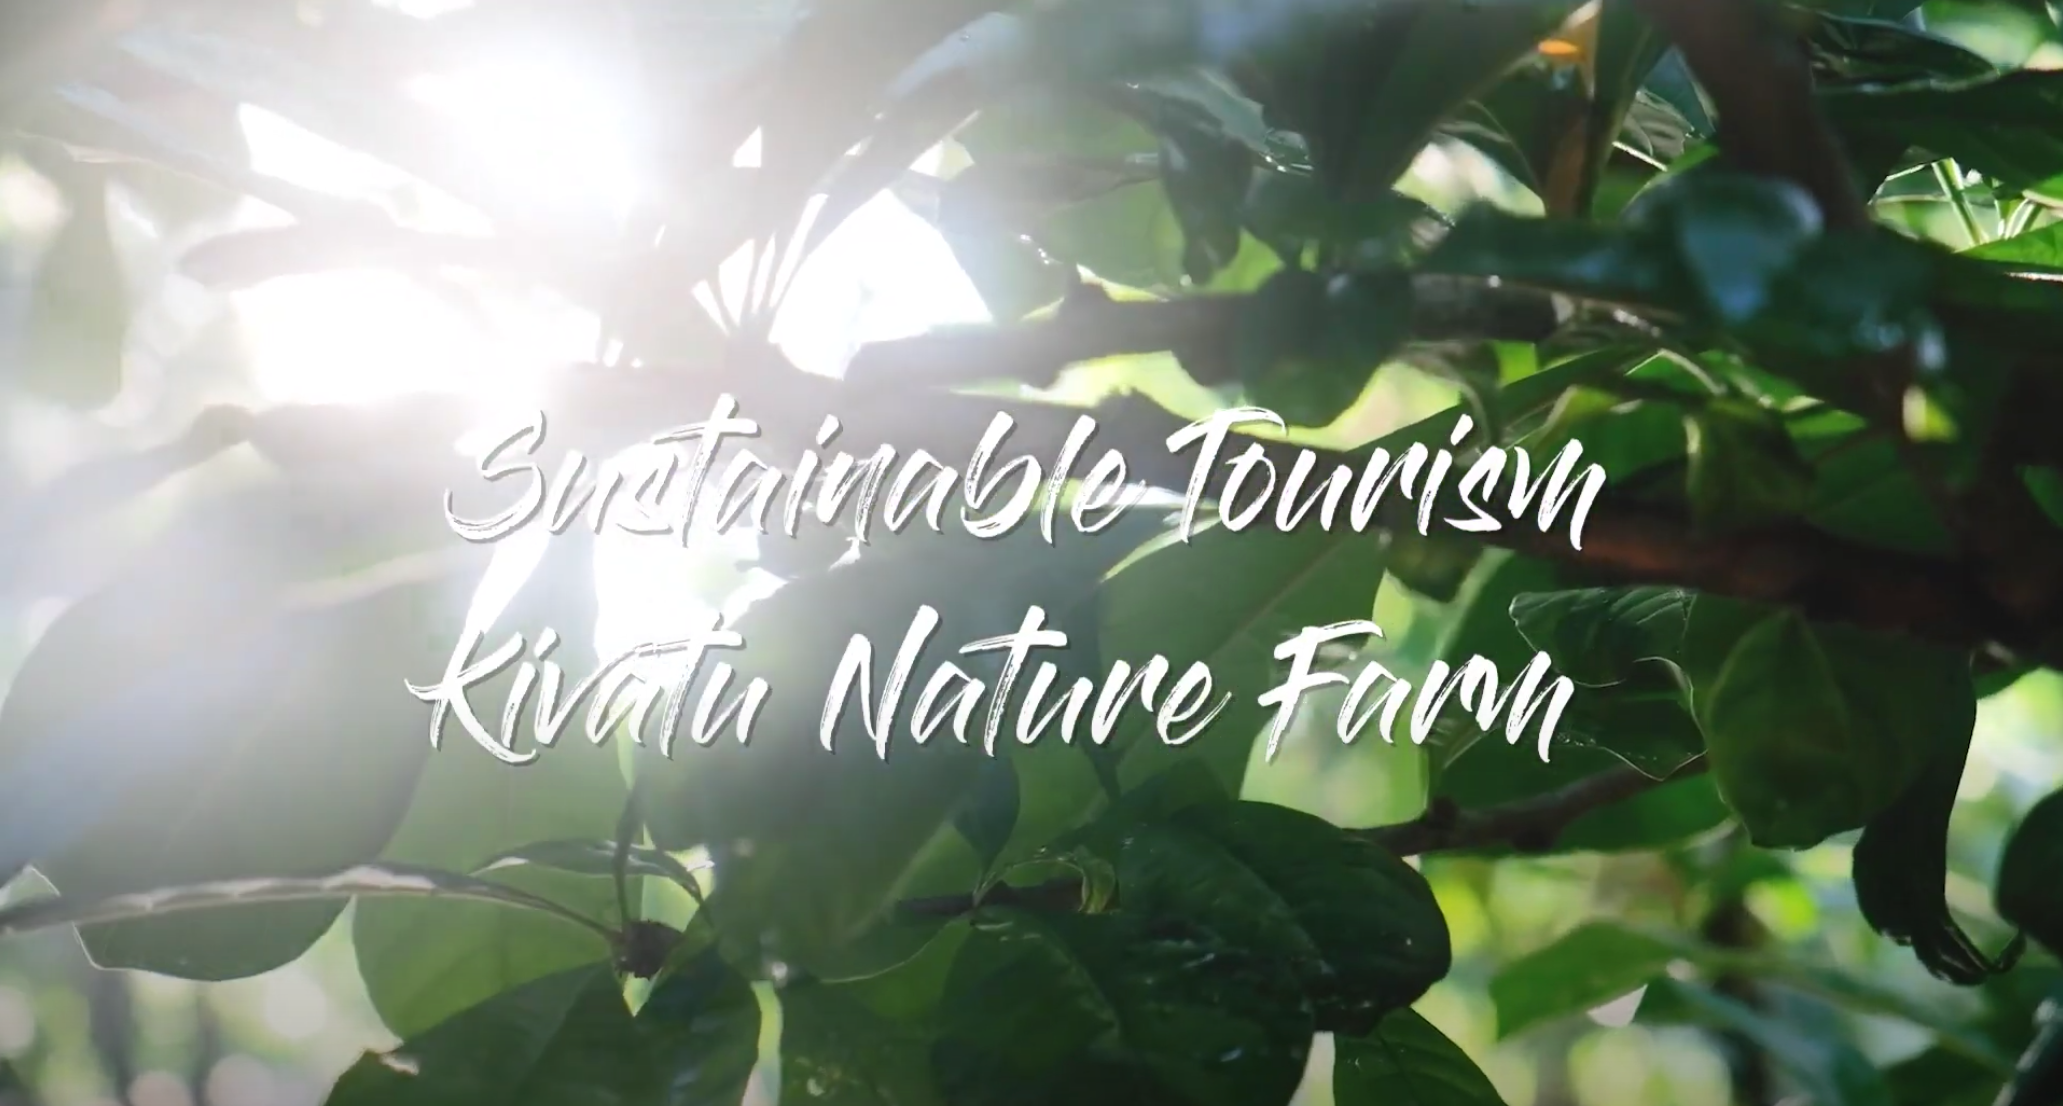 kivatu-nature-farm